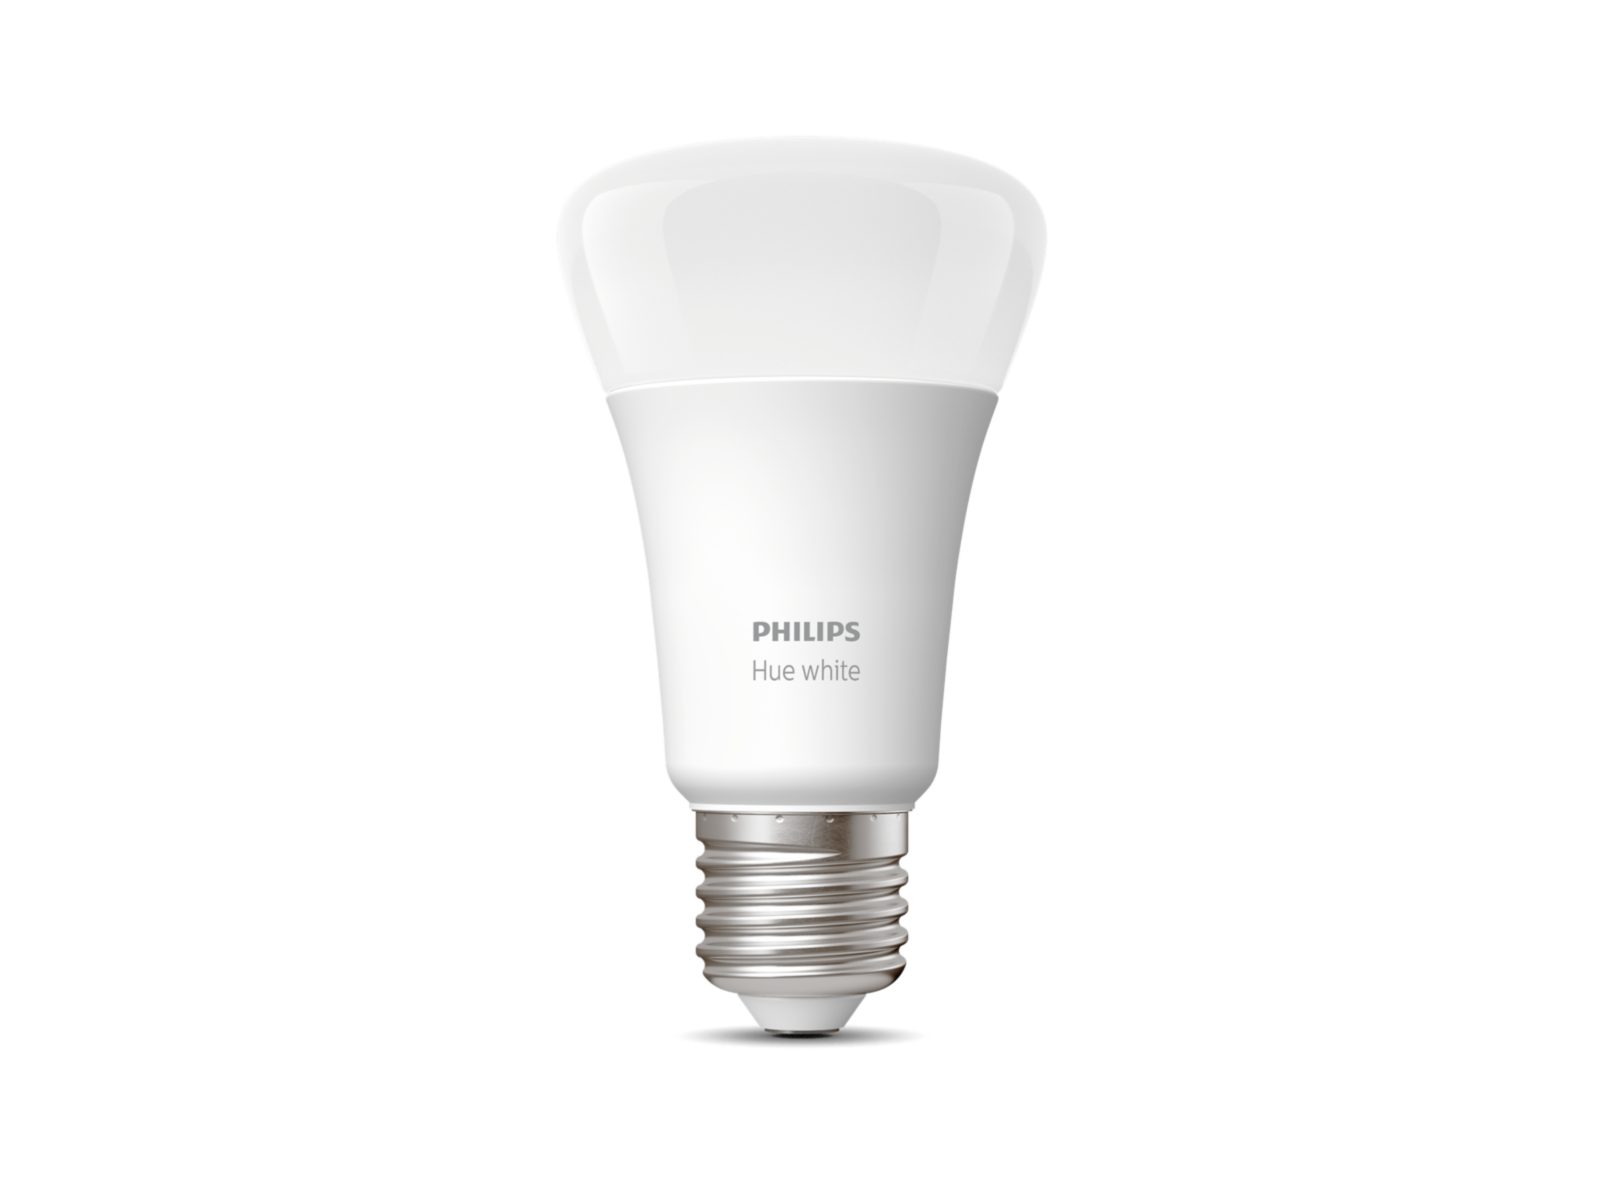 a philips hue smart light bulb